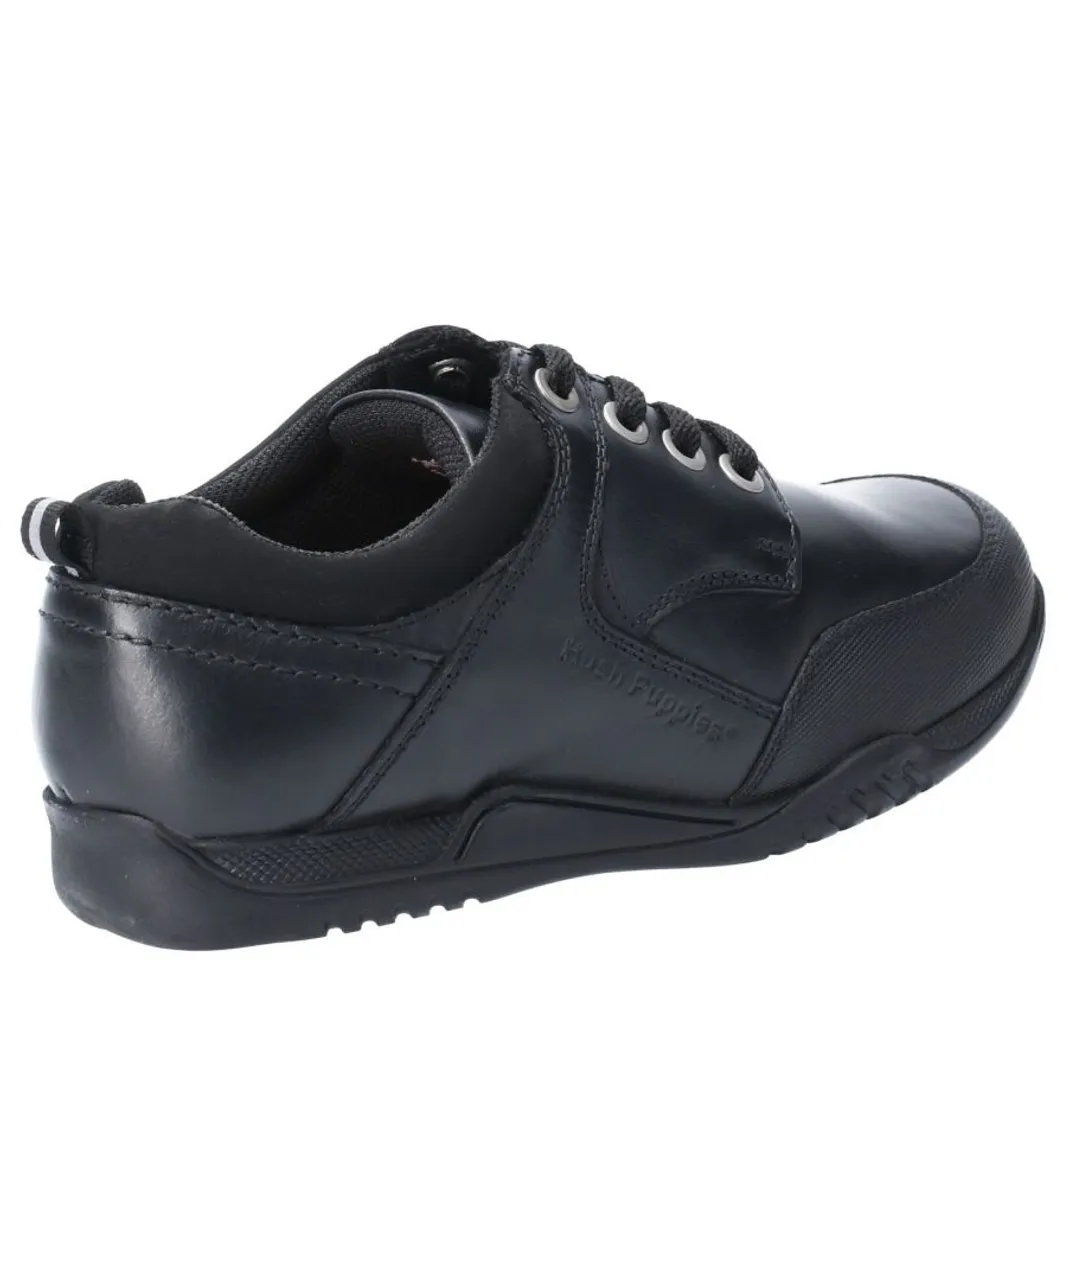 Hush Puppies Boys Dexter Junior School Shoe - Black Leather